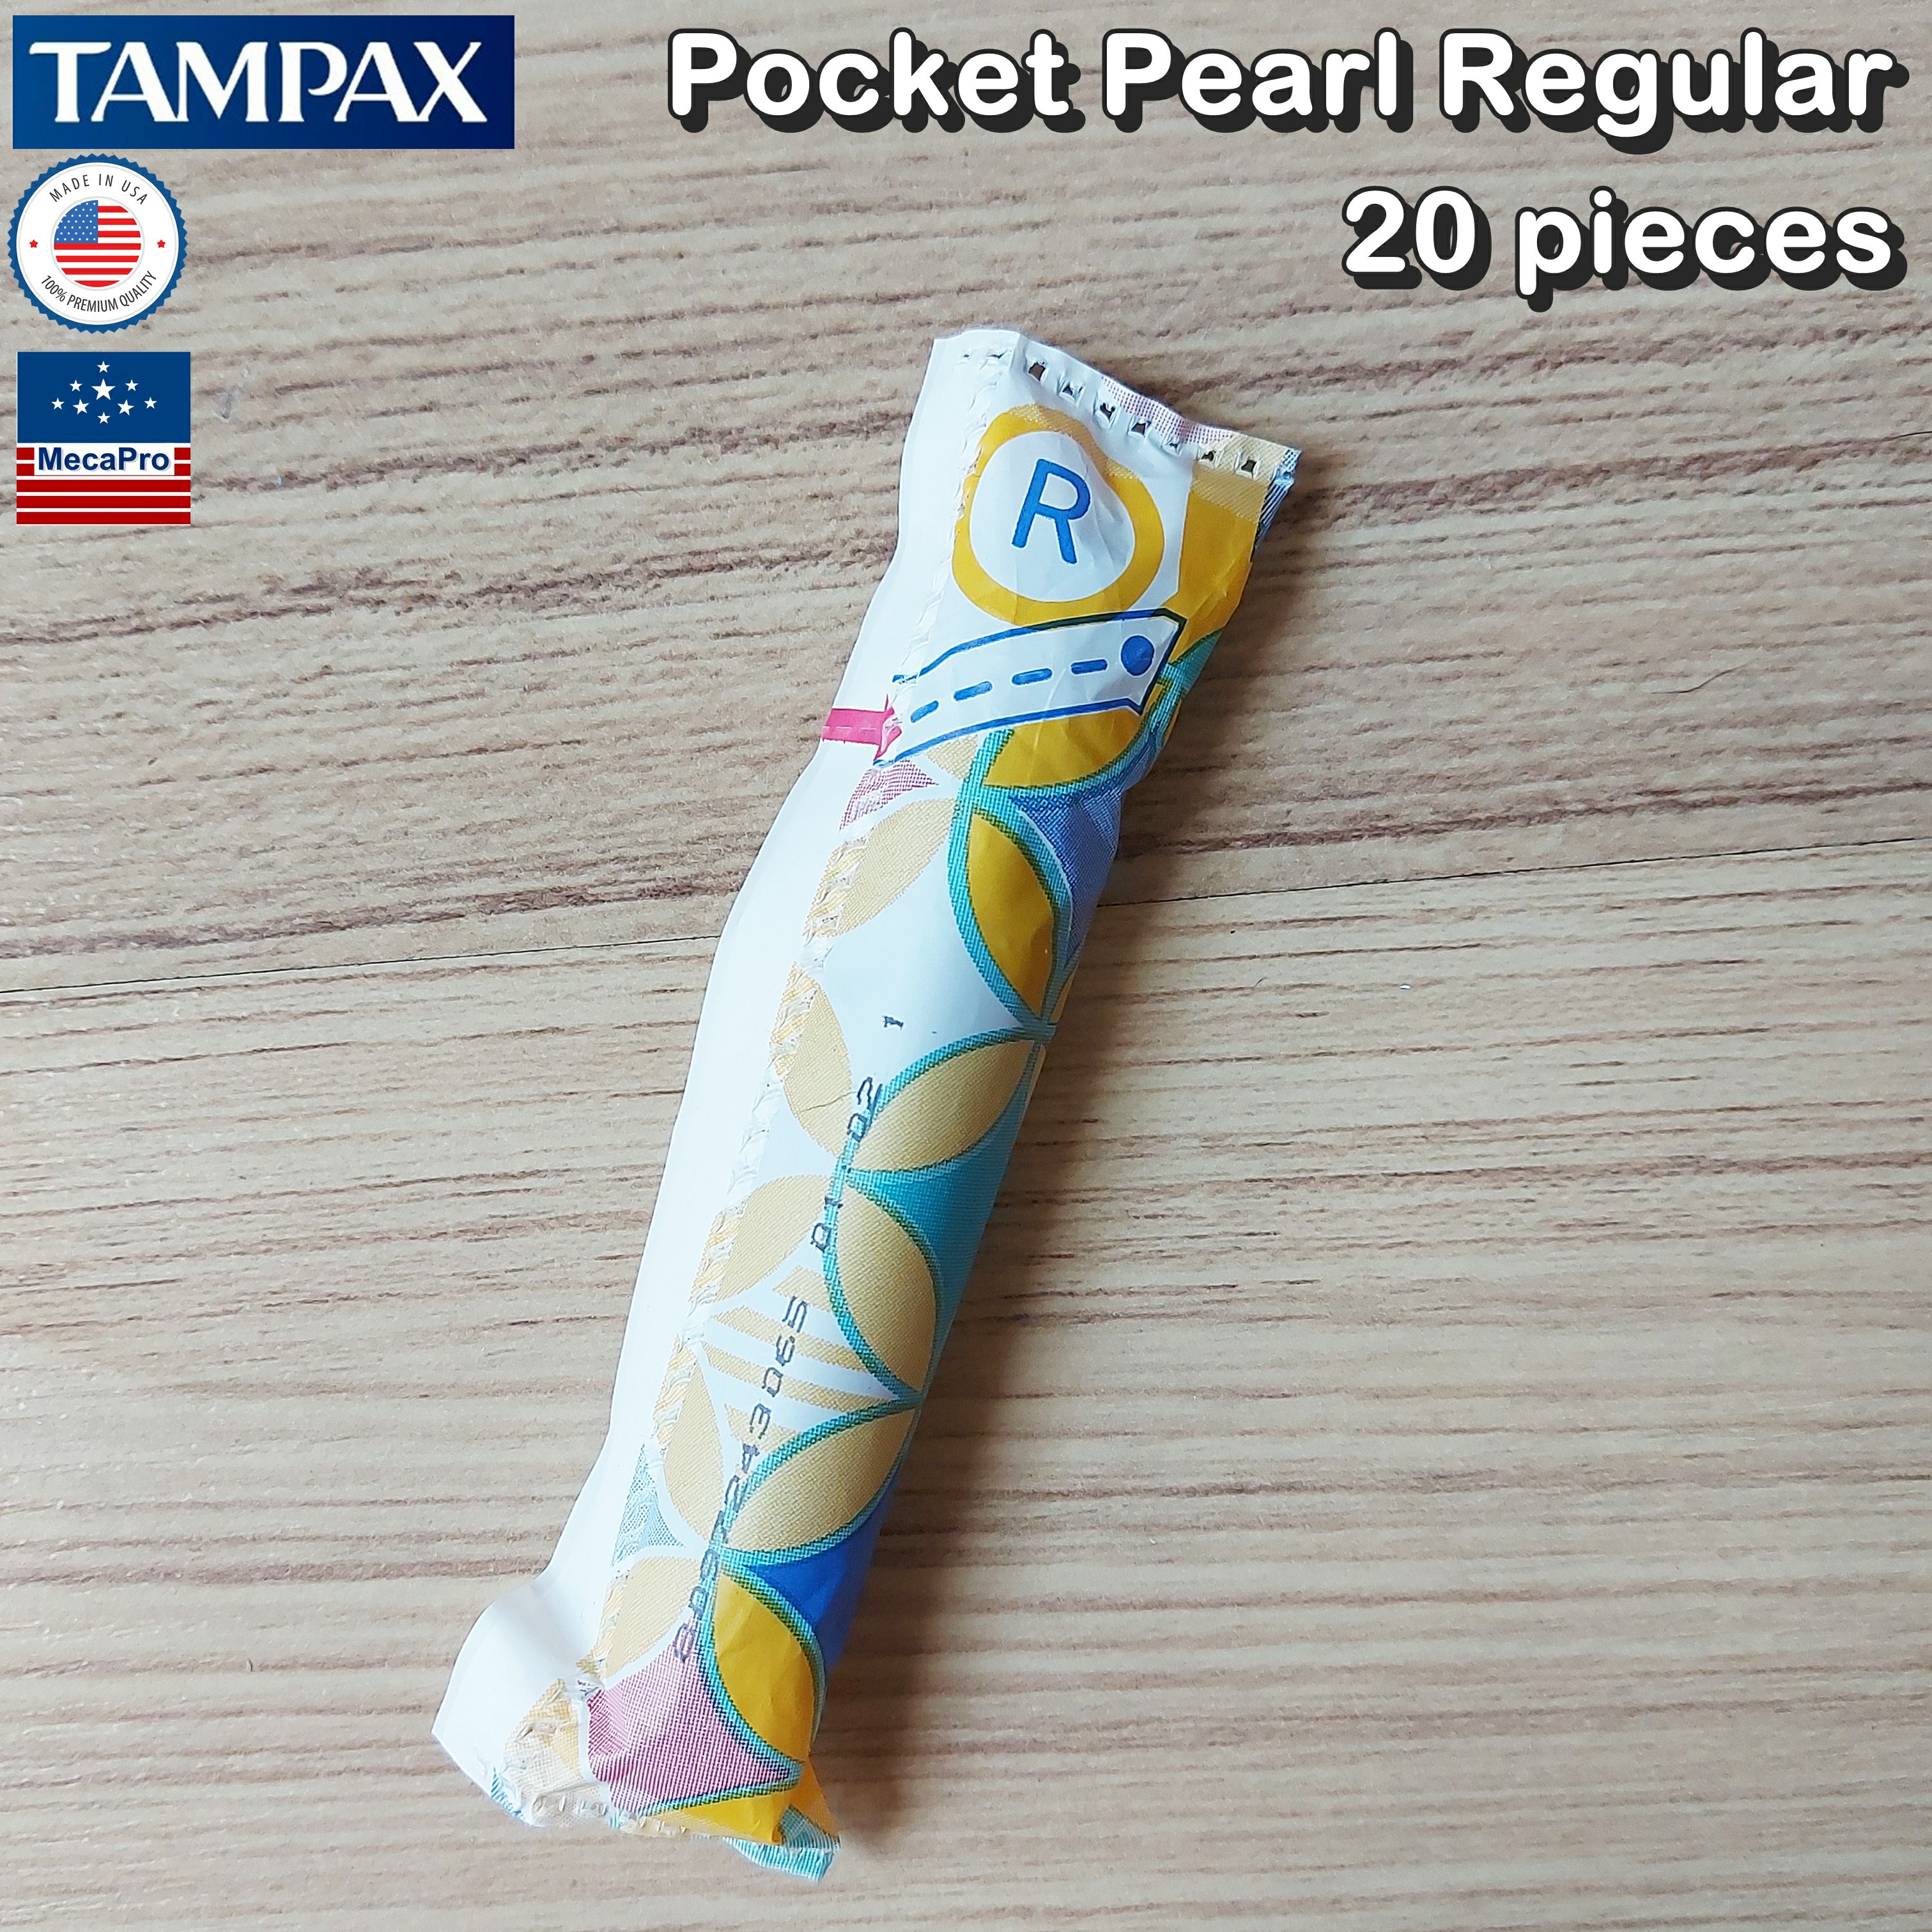 Tampax® Pocket Pearl Plastic Tampons Regular 20 pieces ผ้าอนามัยแบบสอด 20 ชิ้น เหมาะกับวันมาปกติ